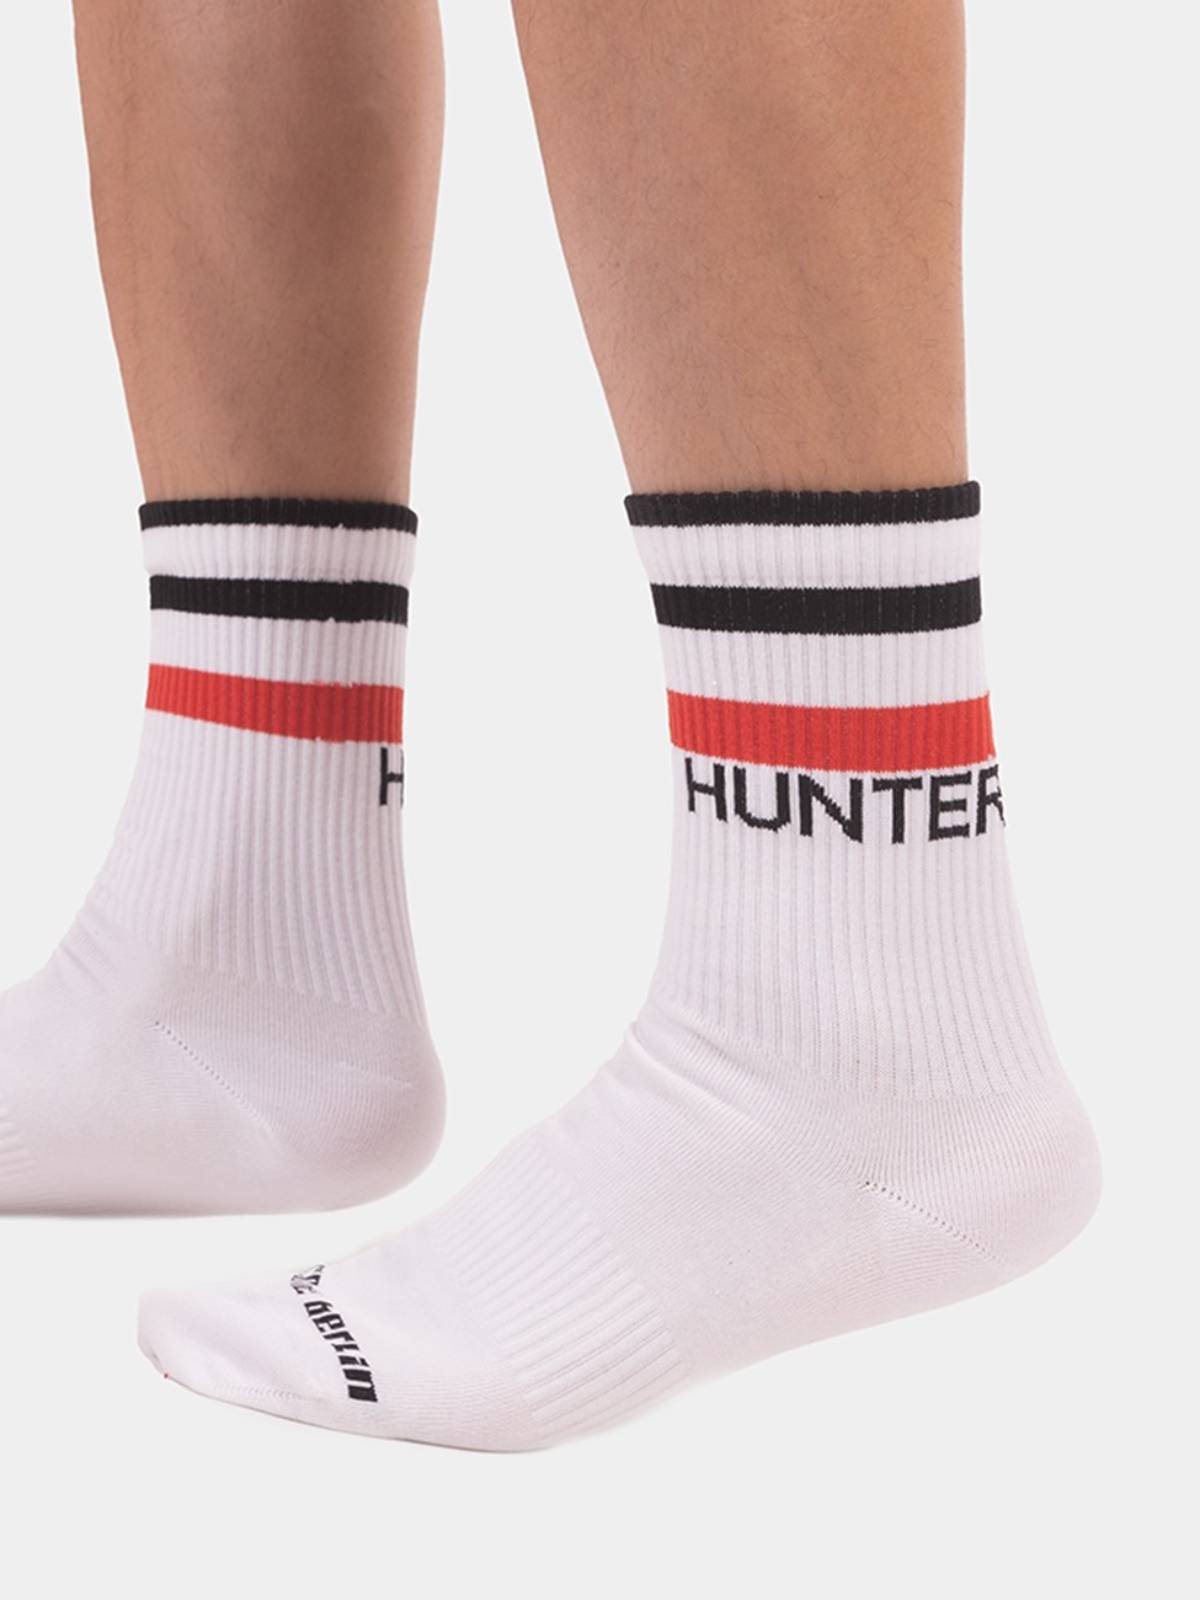 Urban Socks Hunter